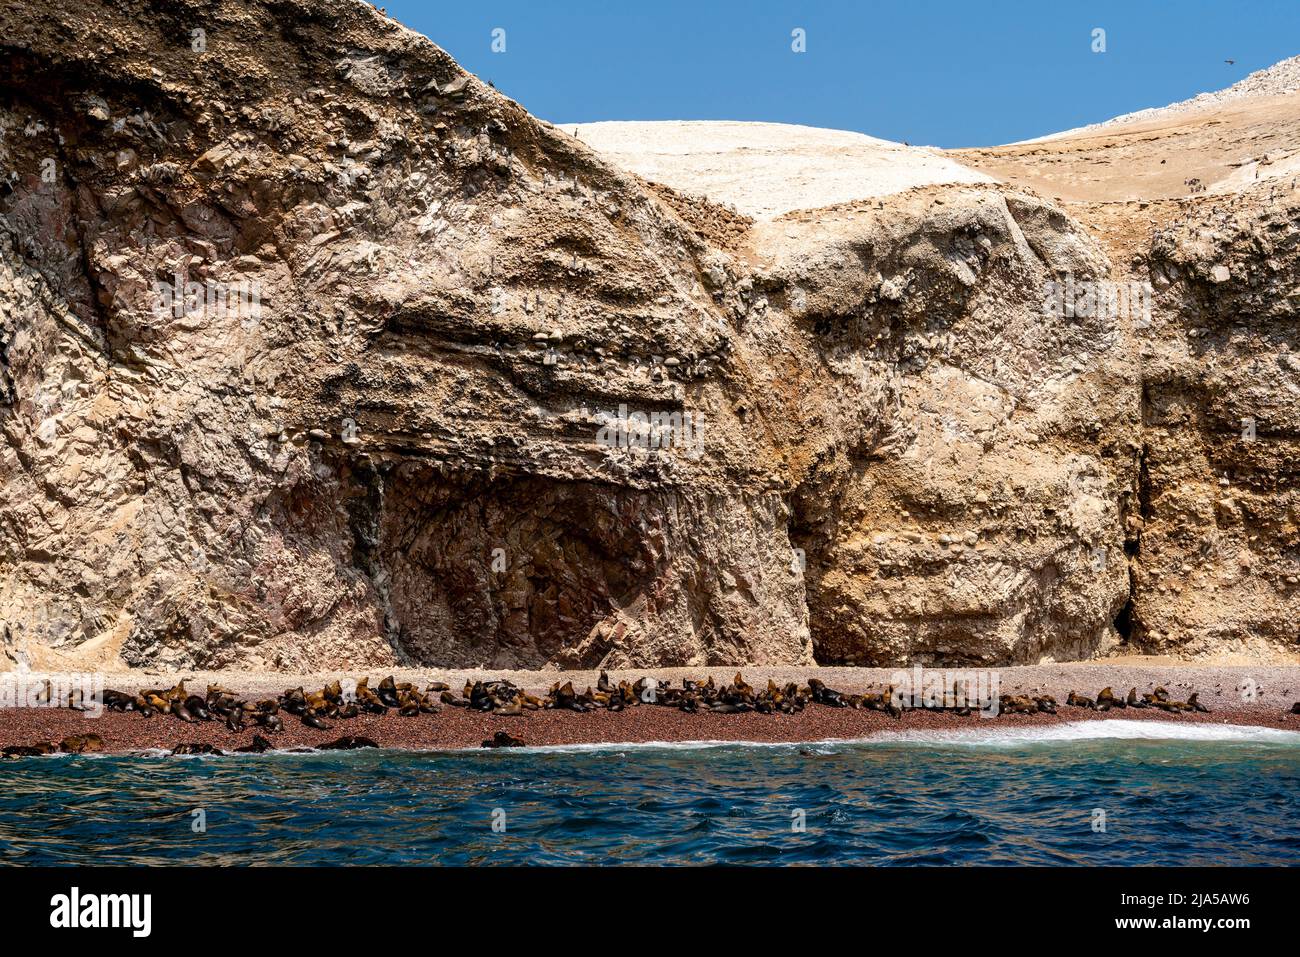 Sea Lions On A Beach In The Islas Ballestas, Paracas National Park, Ica Region, Peru. Stock Photo